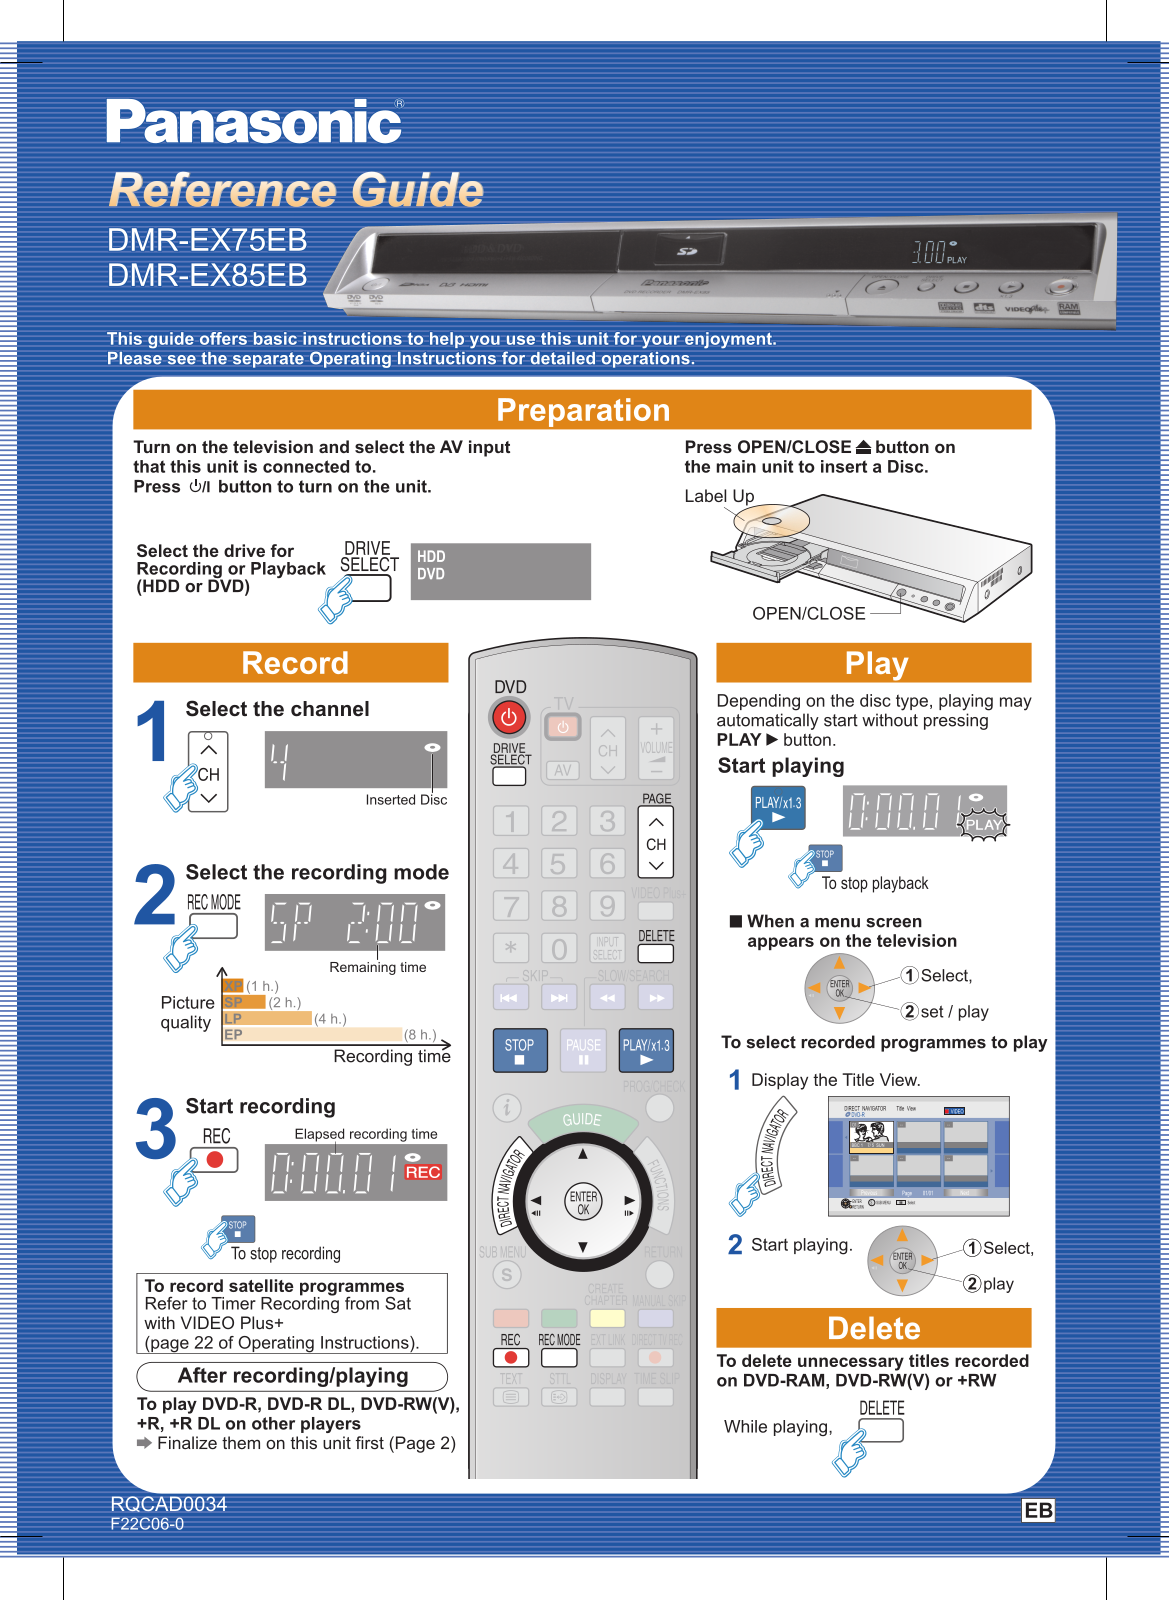 Panasonic DMR-EX85EB, DMR-EX75EB User Manual